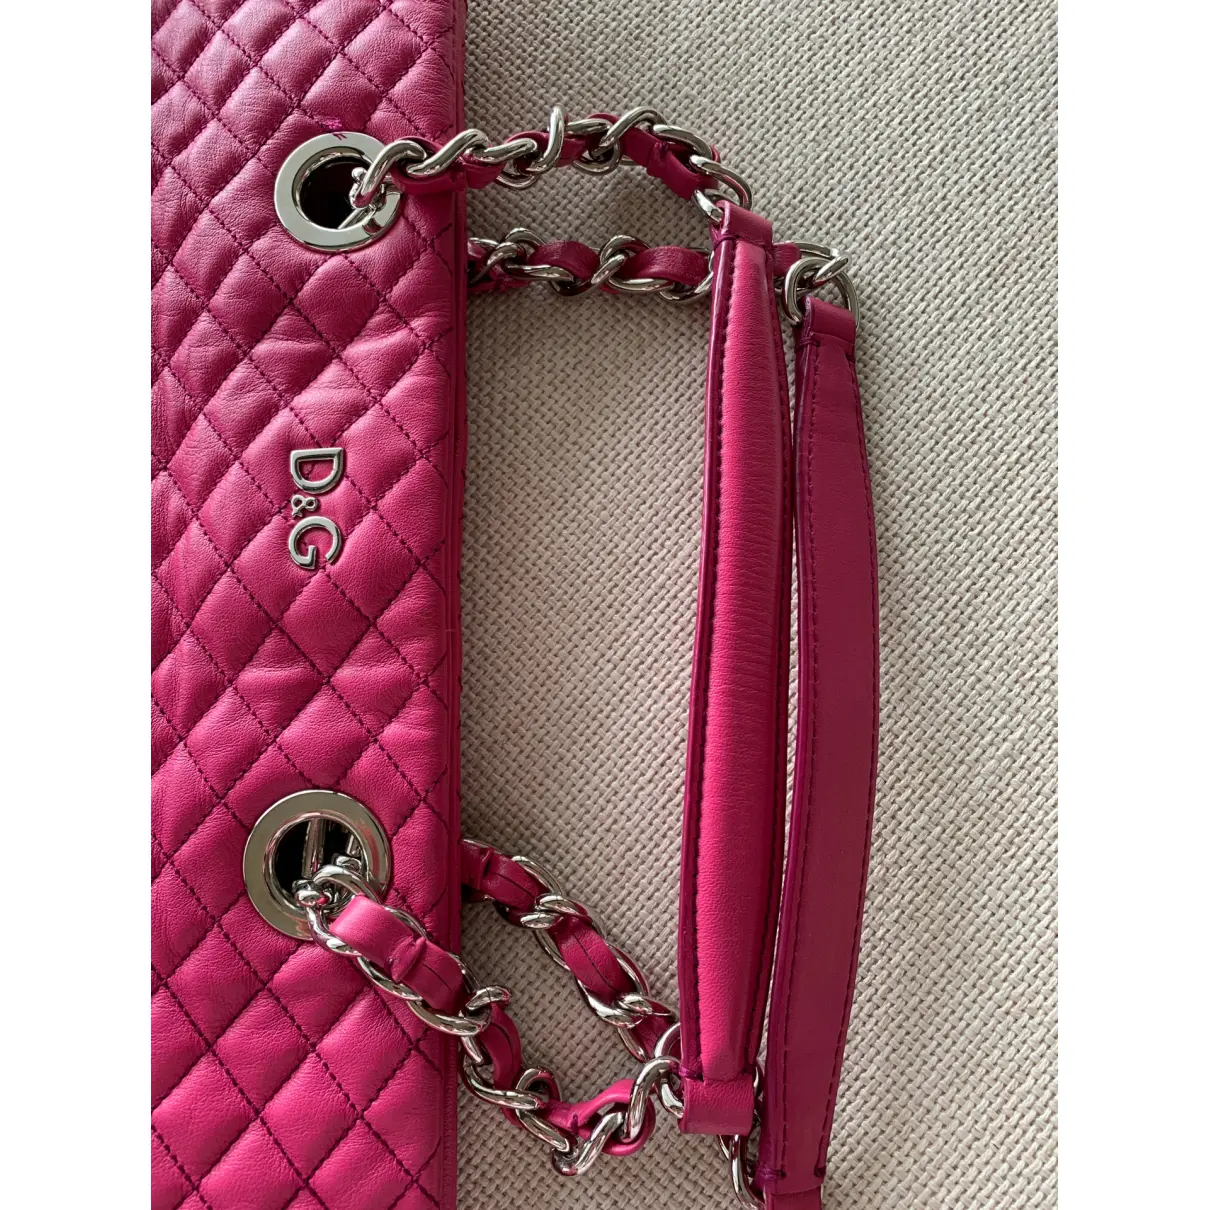 Buy D&G Leather handbag online